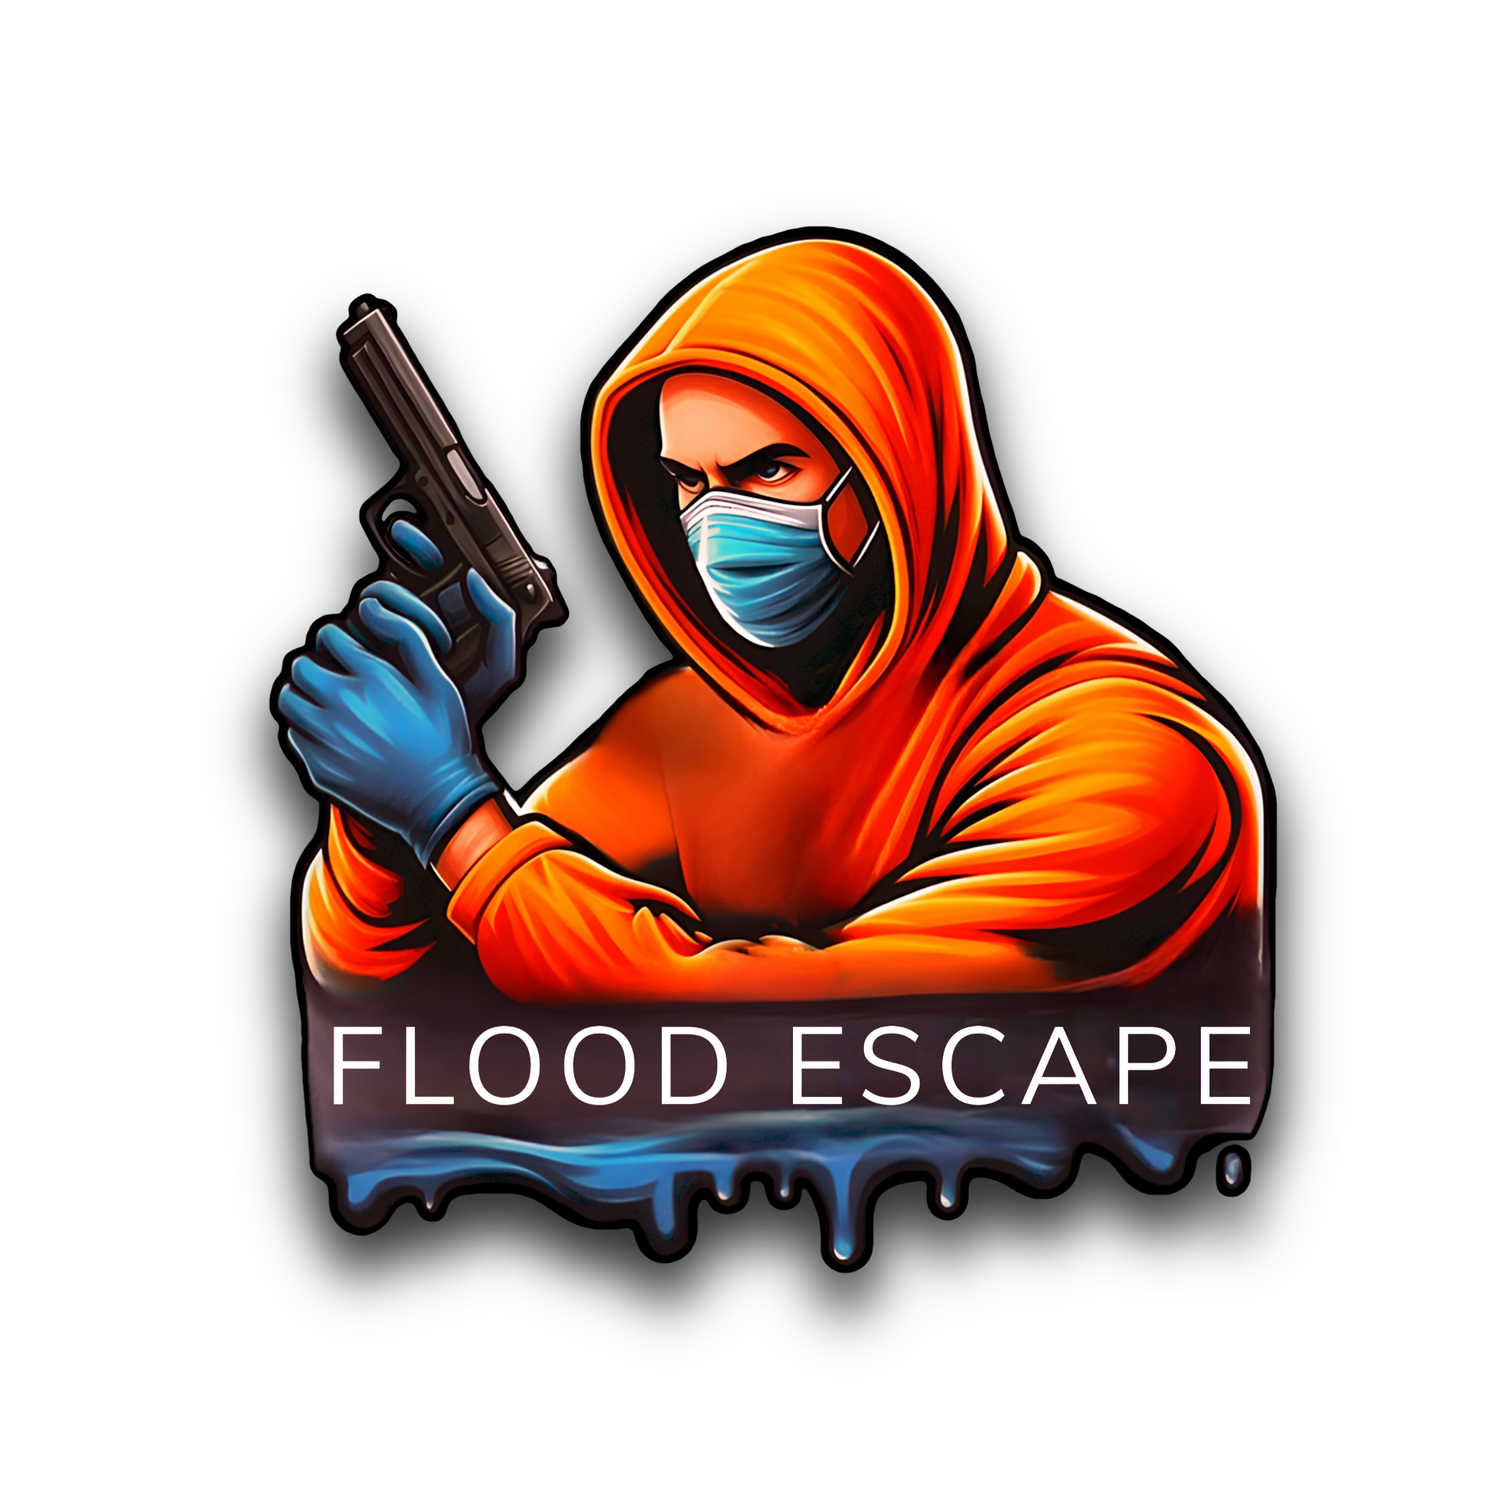 Flood Escape Game